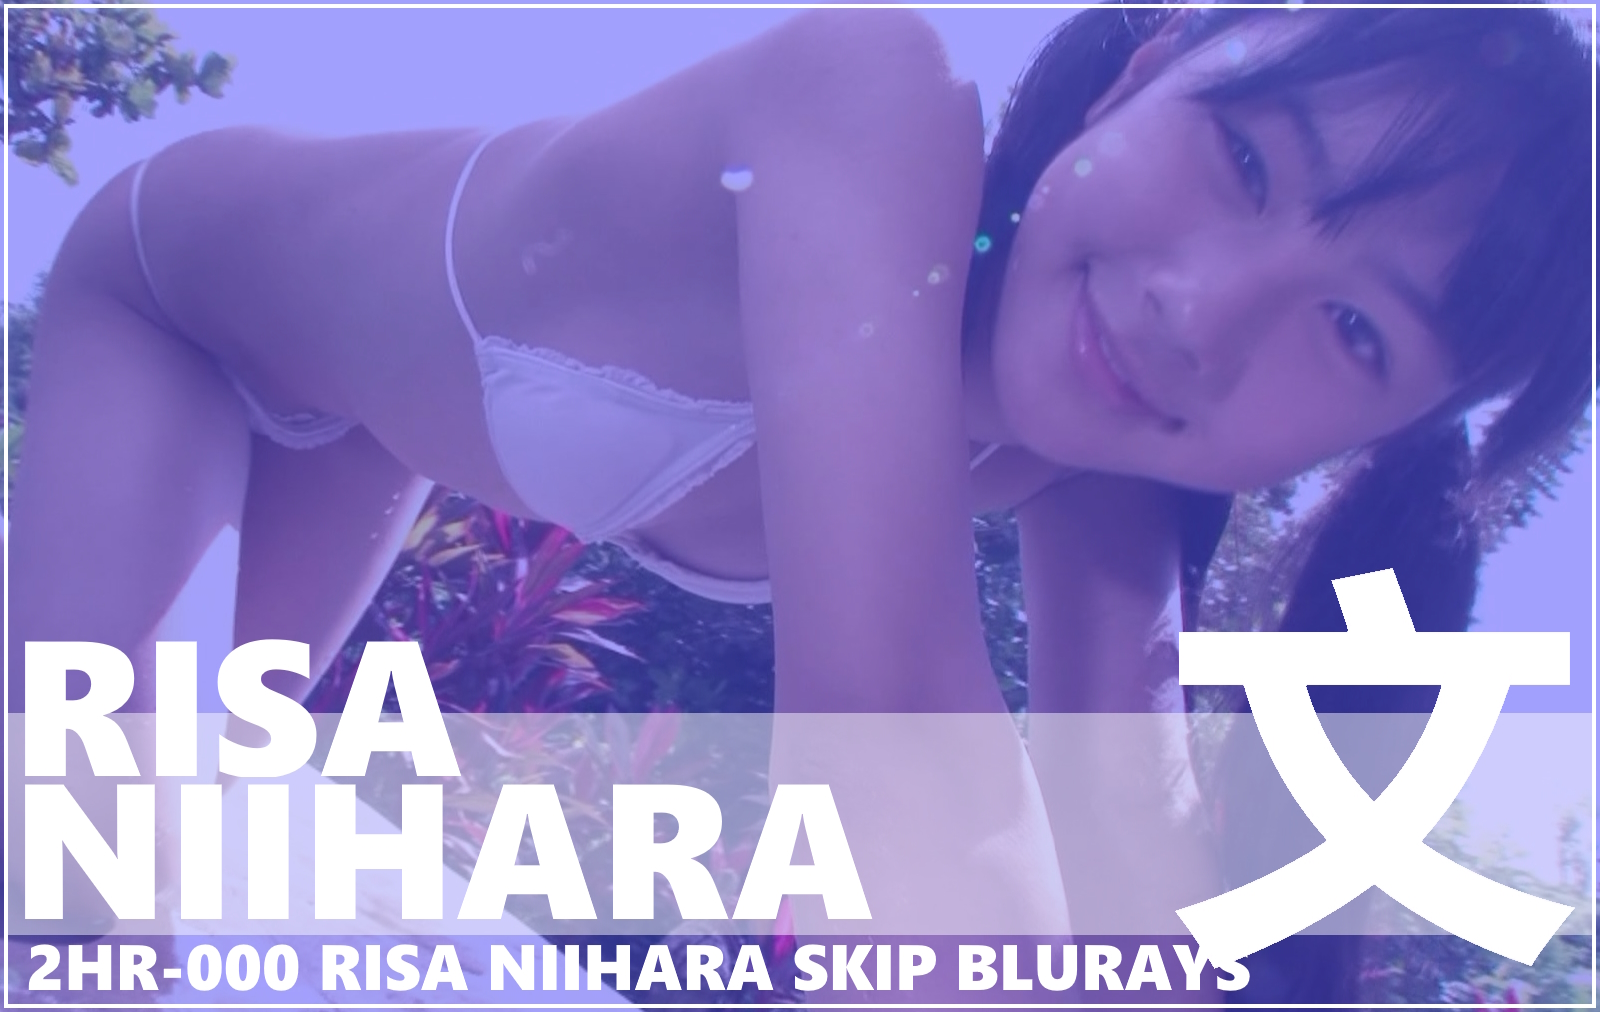 2HR-000 Risa Niihara Skip Bluray Set